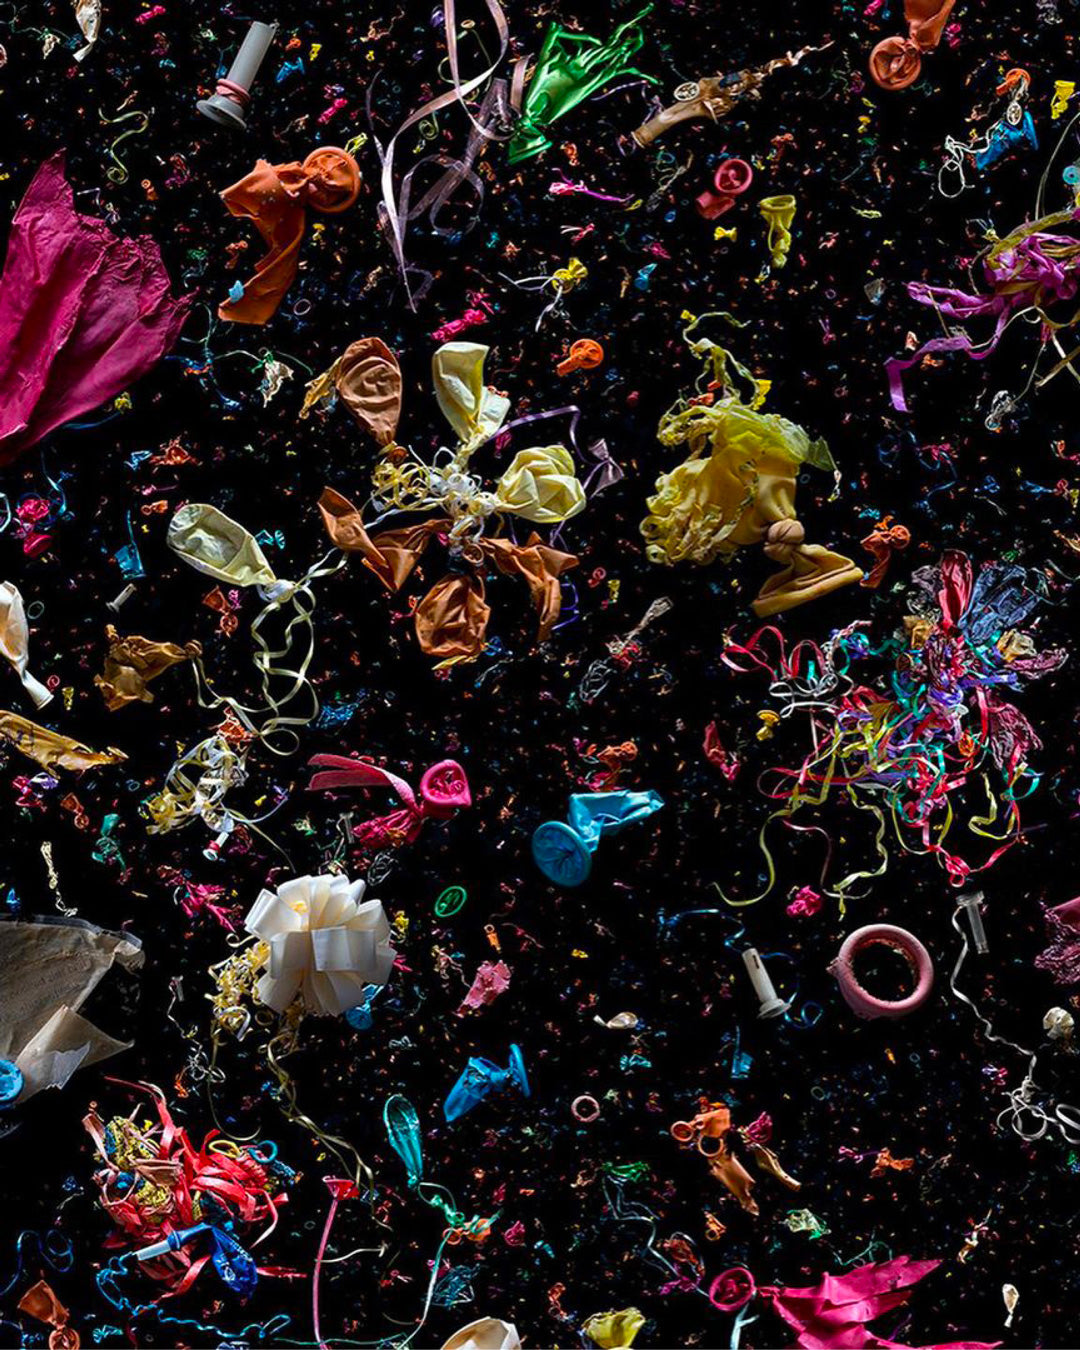 Ocean Plastic becomes Art - Mandy Barker